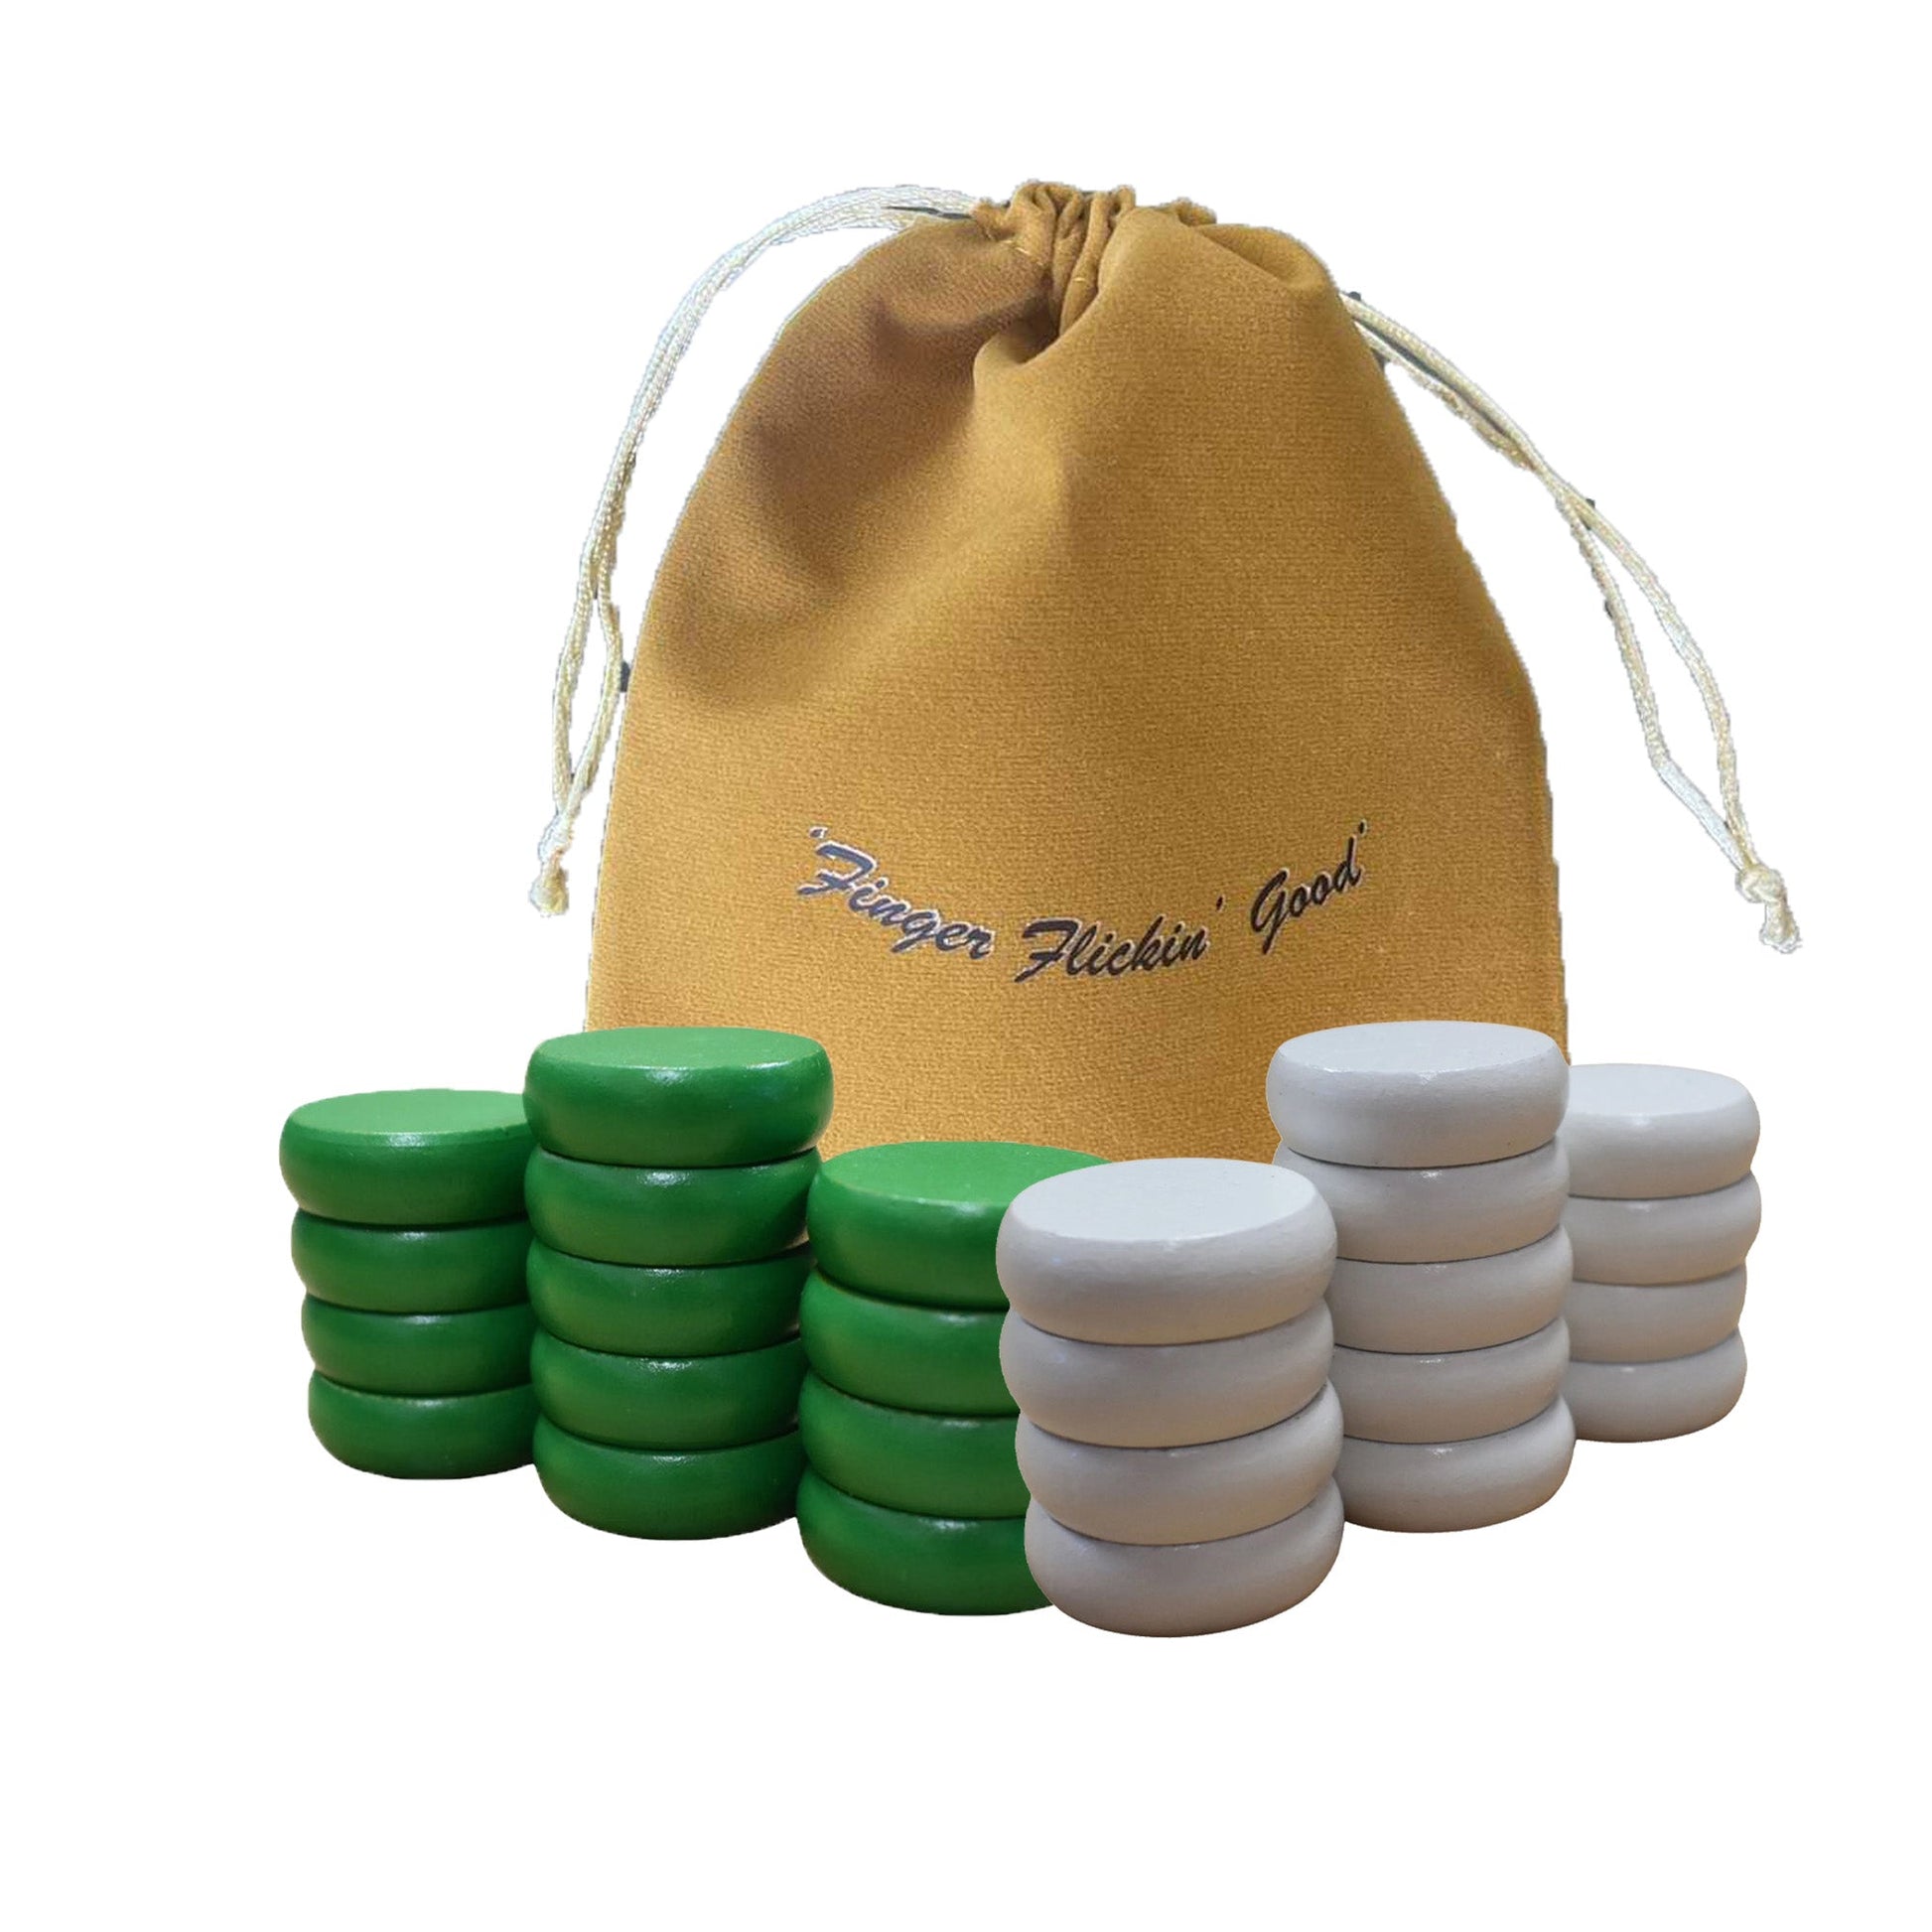 Crokinole Tournament Discs - 13 Green and 13 White - Size 1-1/4" - 24 Needed + 2 Spare Discs - Bag Included - Carrom Alternative - Crokinole Europe